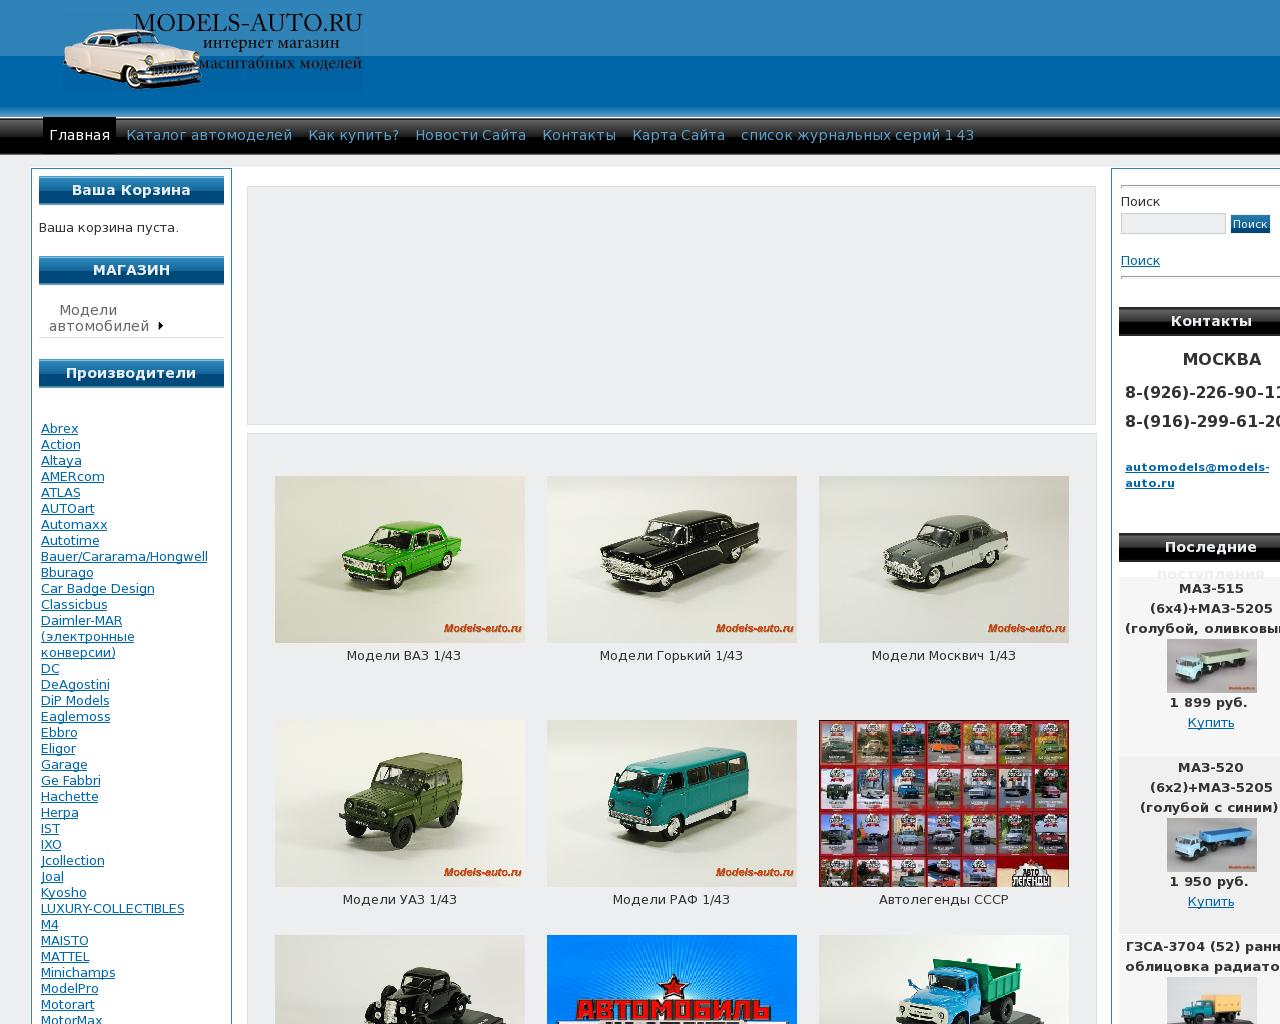 Изображение сайта models-auto.ru в разрешении 1280x1024